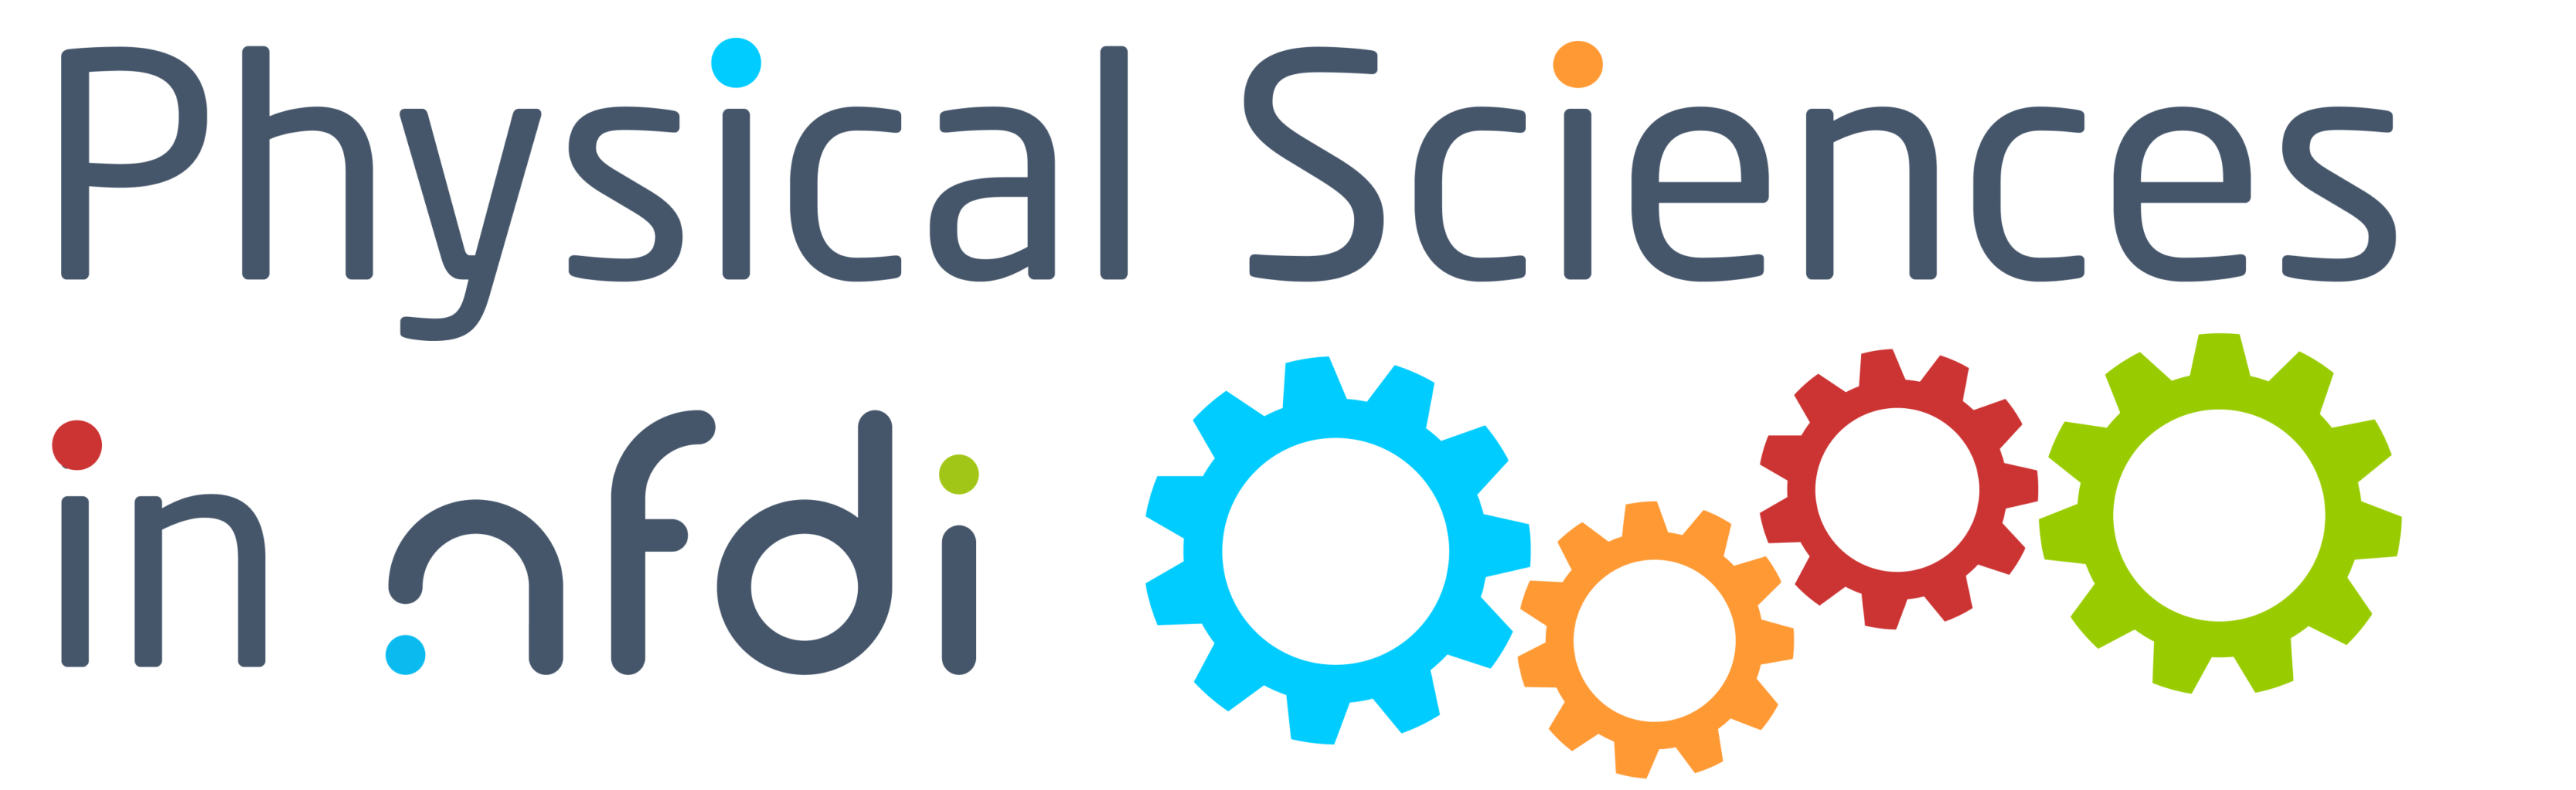 Physical Sciences in NFDI logo